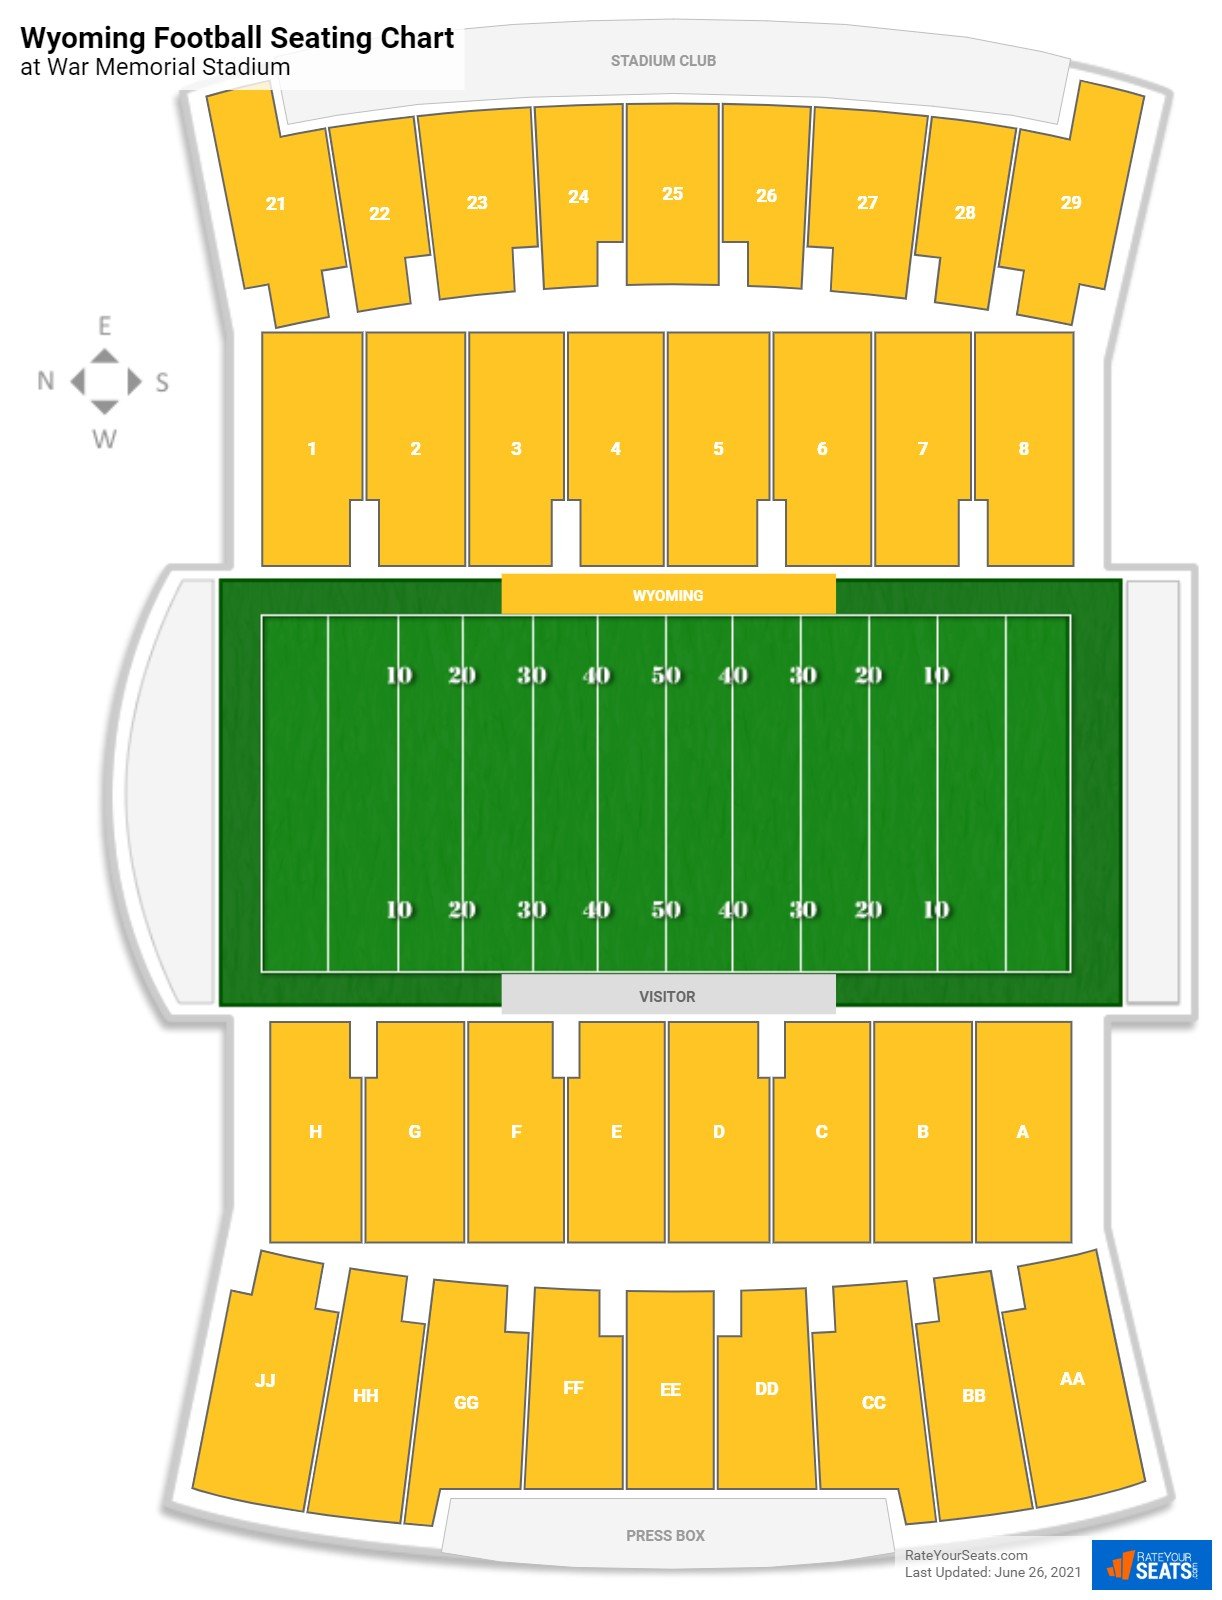 Wyoming Cowboys Seating Chart at War Memorial Stadium